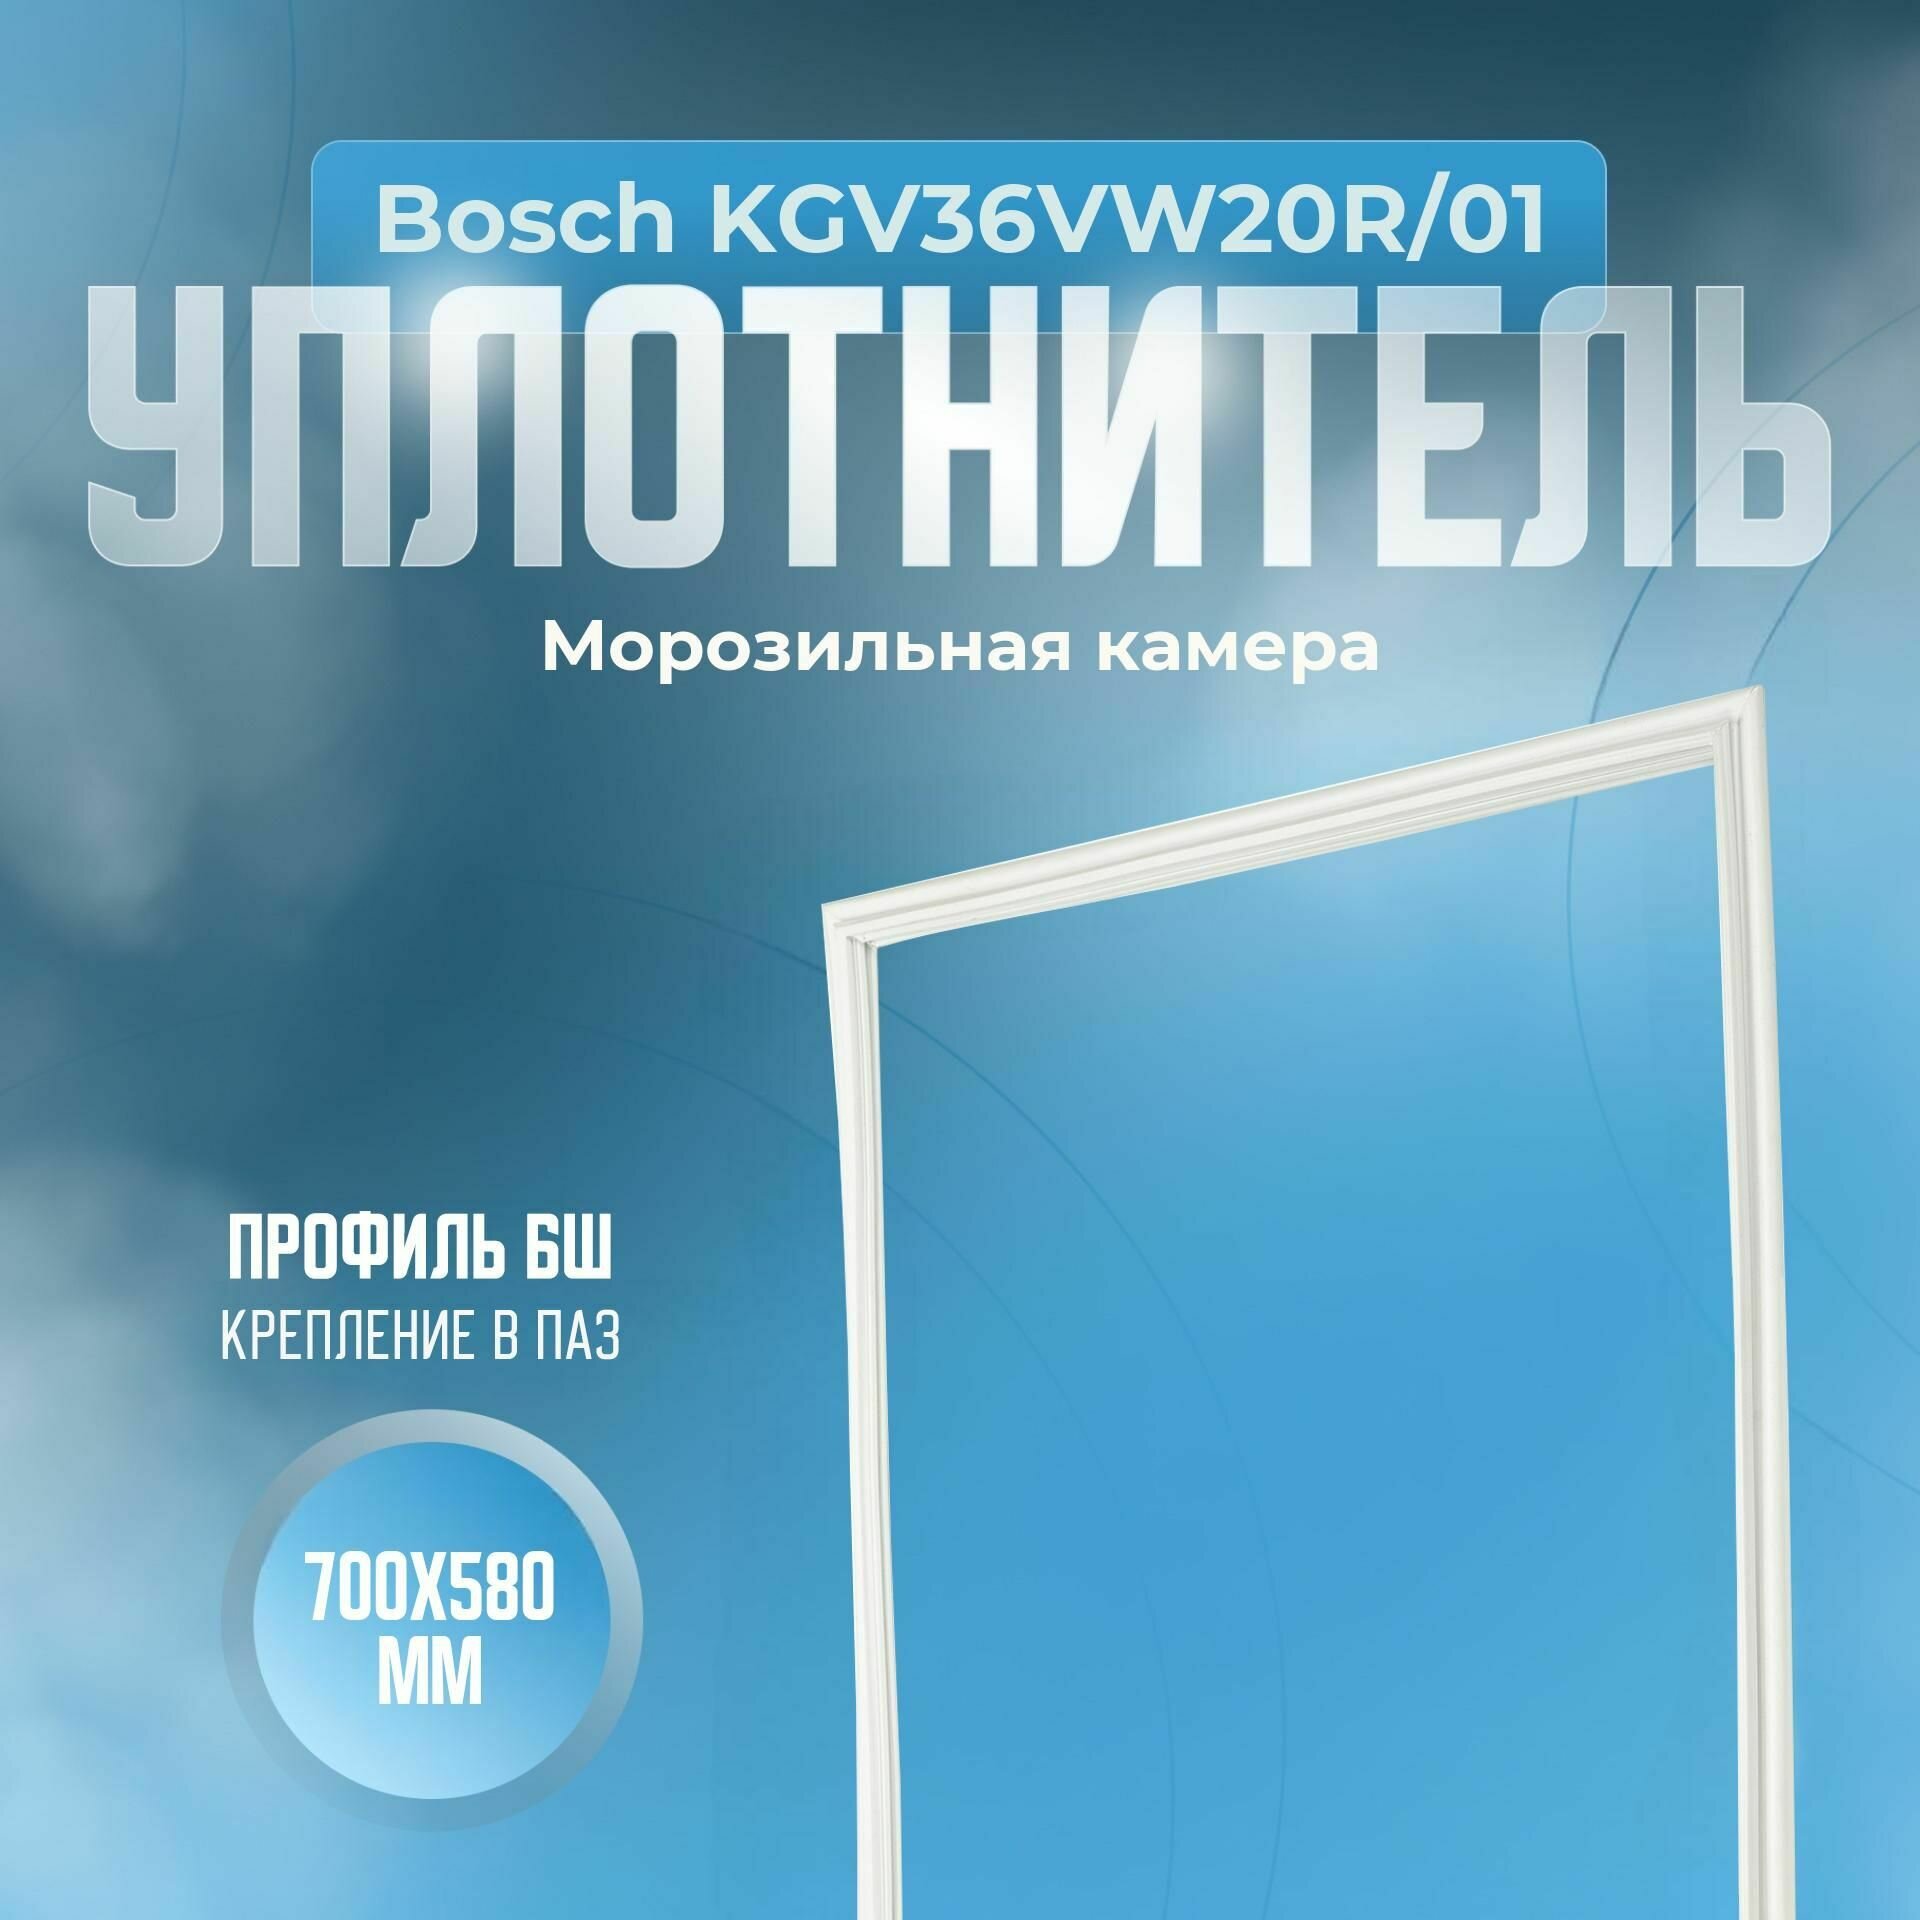 Уплотнитель Bosch KGV36VW20R/01. м. к, Размер - 700x580 мм. БШ